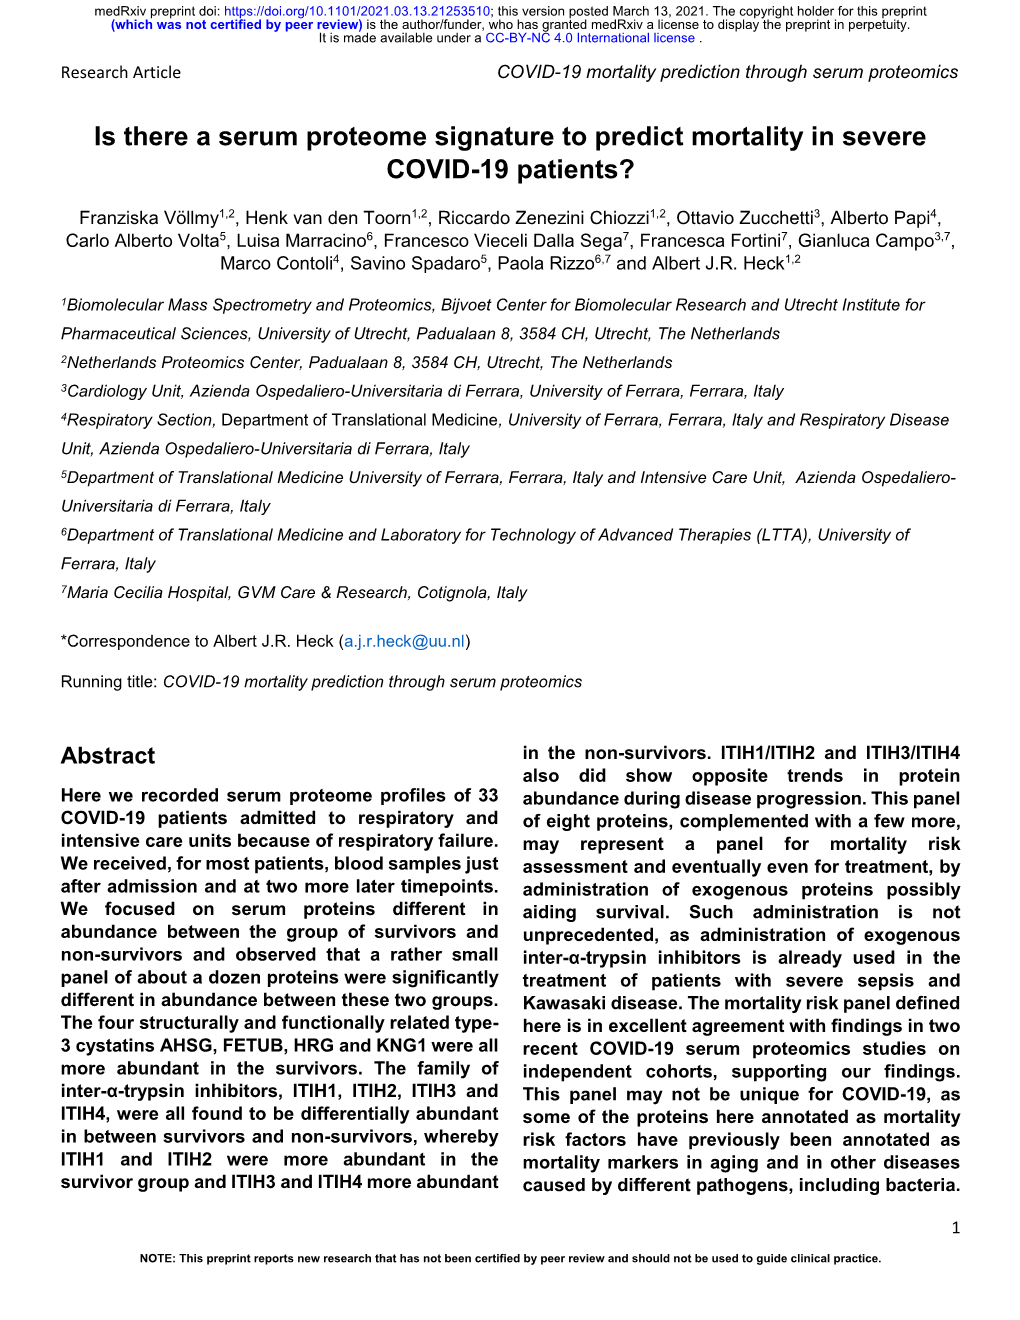 Is There a Serum Proteome Signature to Predict Mortality in Severe COVID-19 Patients?